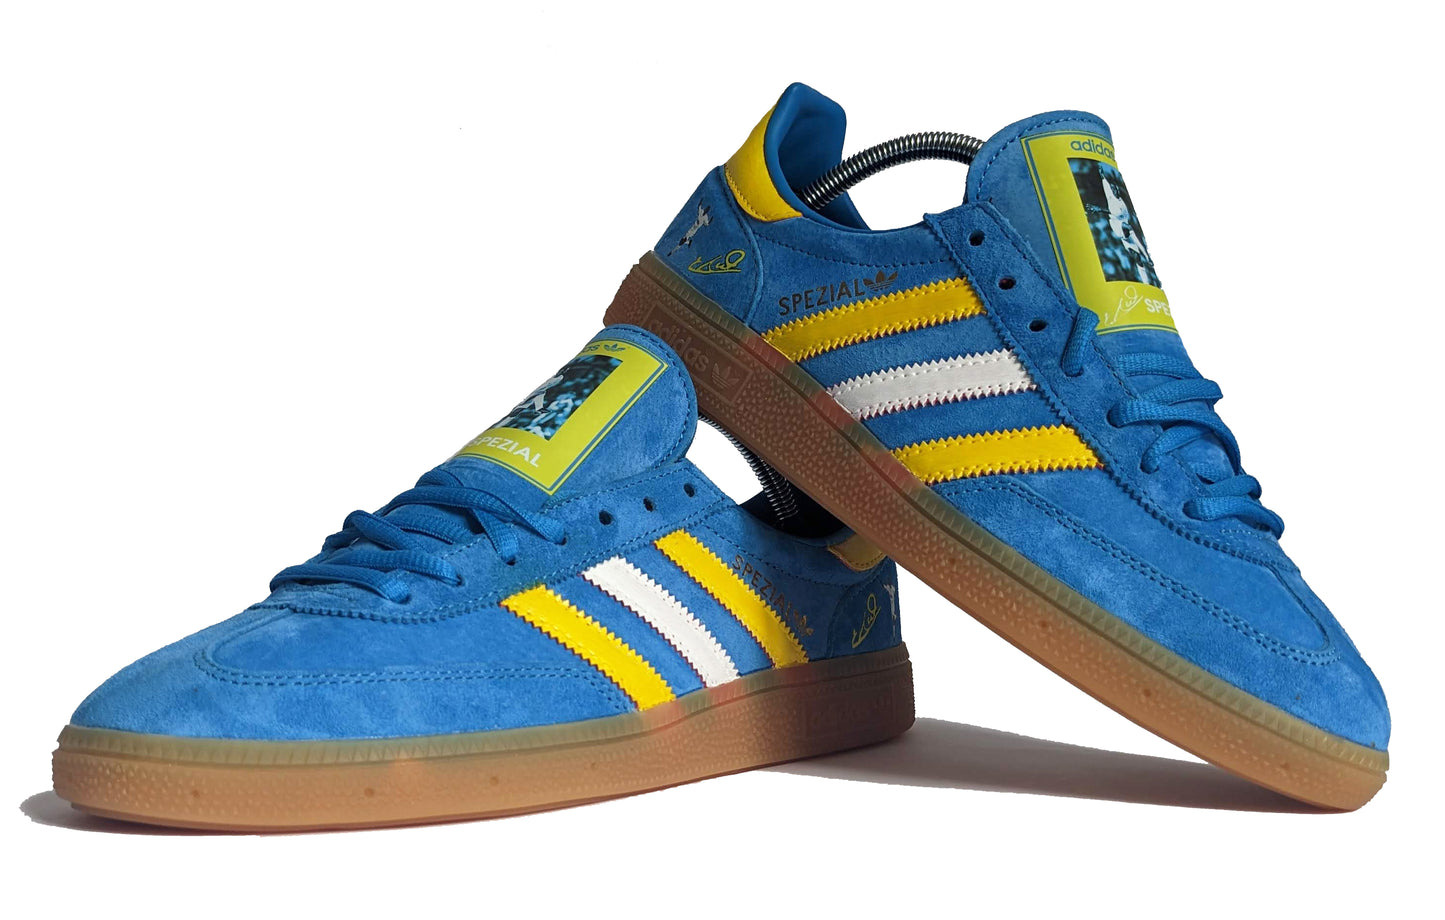 Limited edition Leeds United FC retro Tony Yeboah inspired blue /yellow Adidas custom Handball Spezial trainers / sneakers